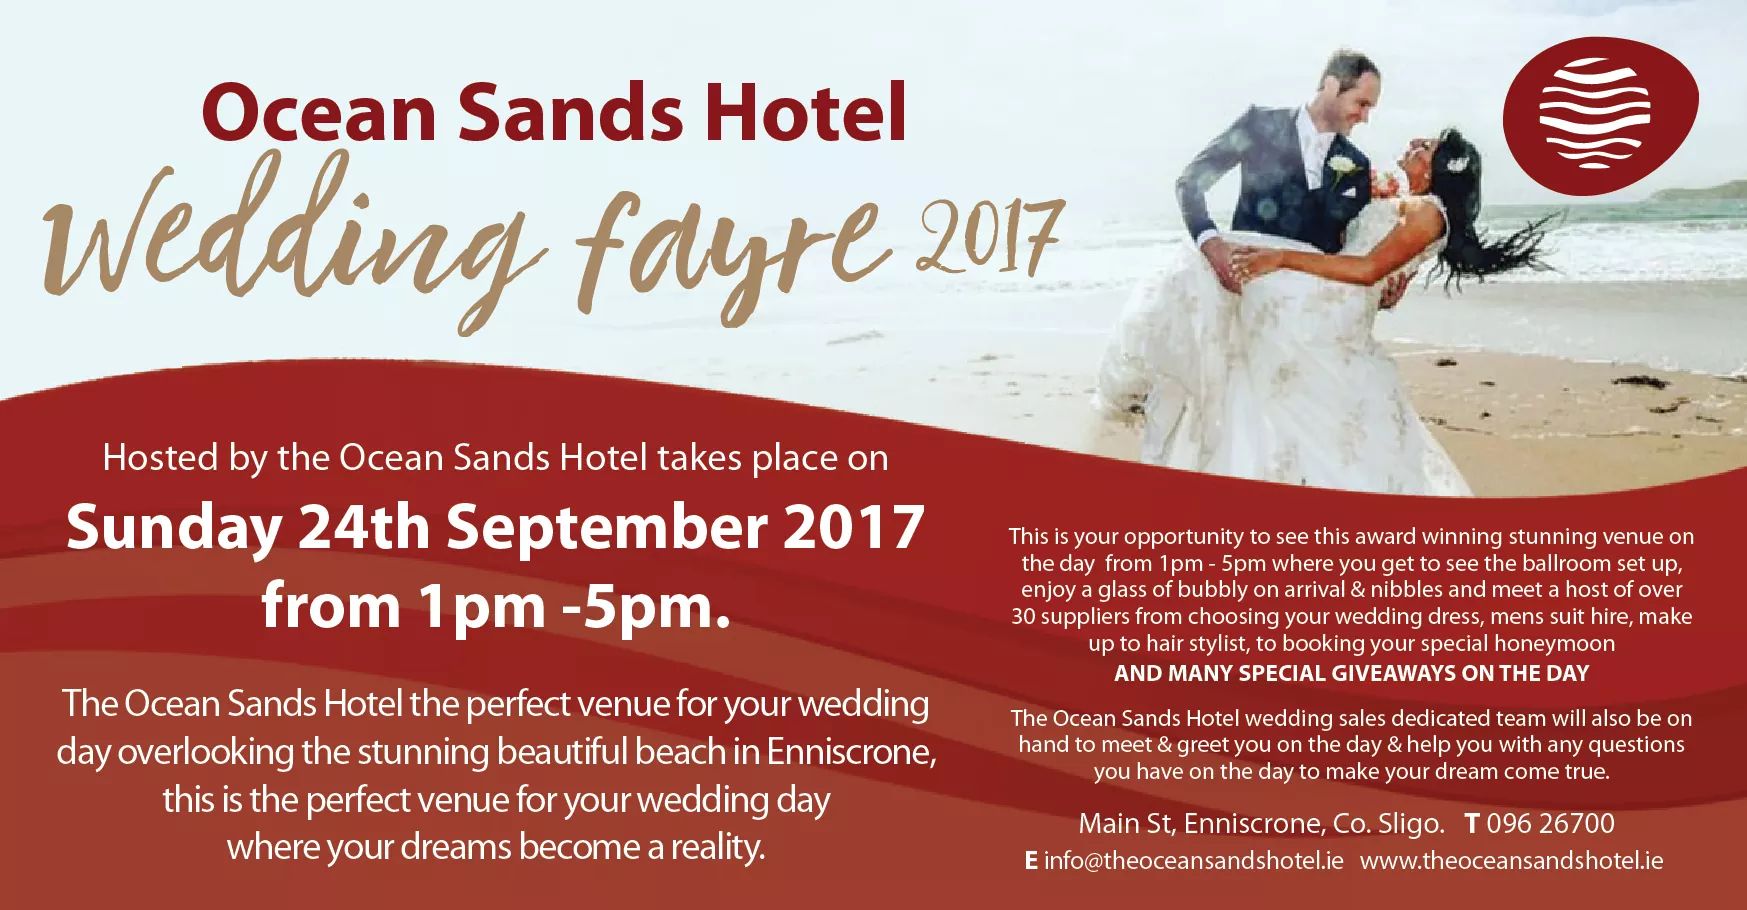 Ocean Sands Hotel Wedding Fayre 2017